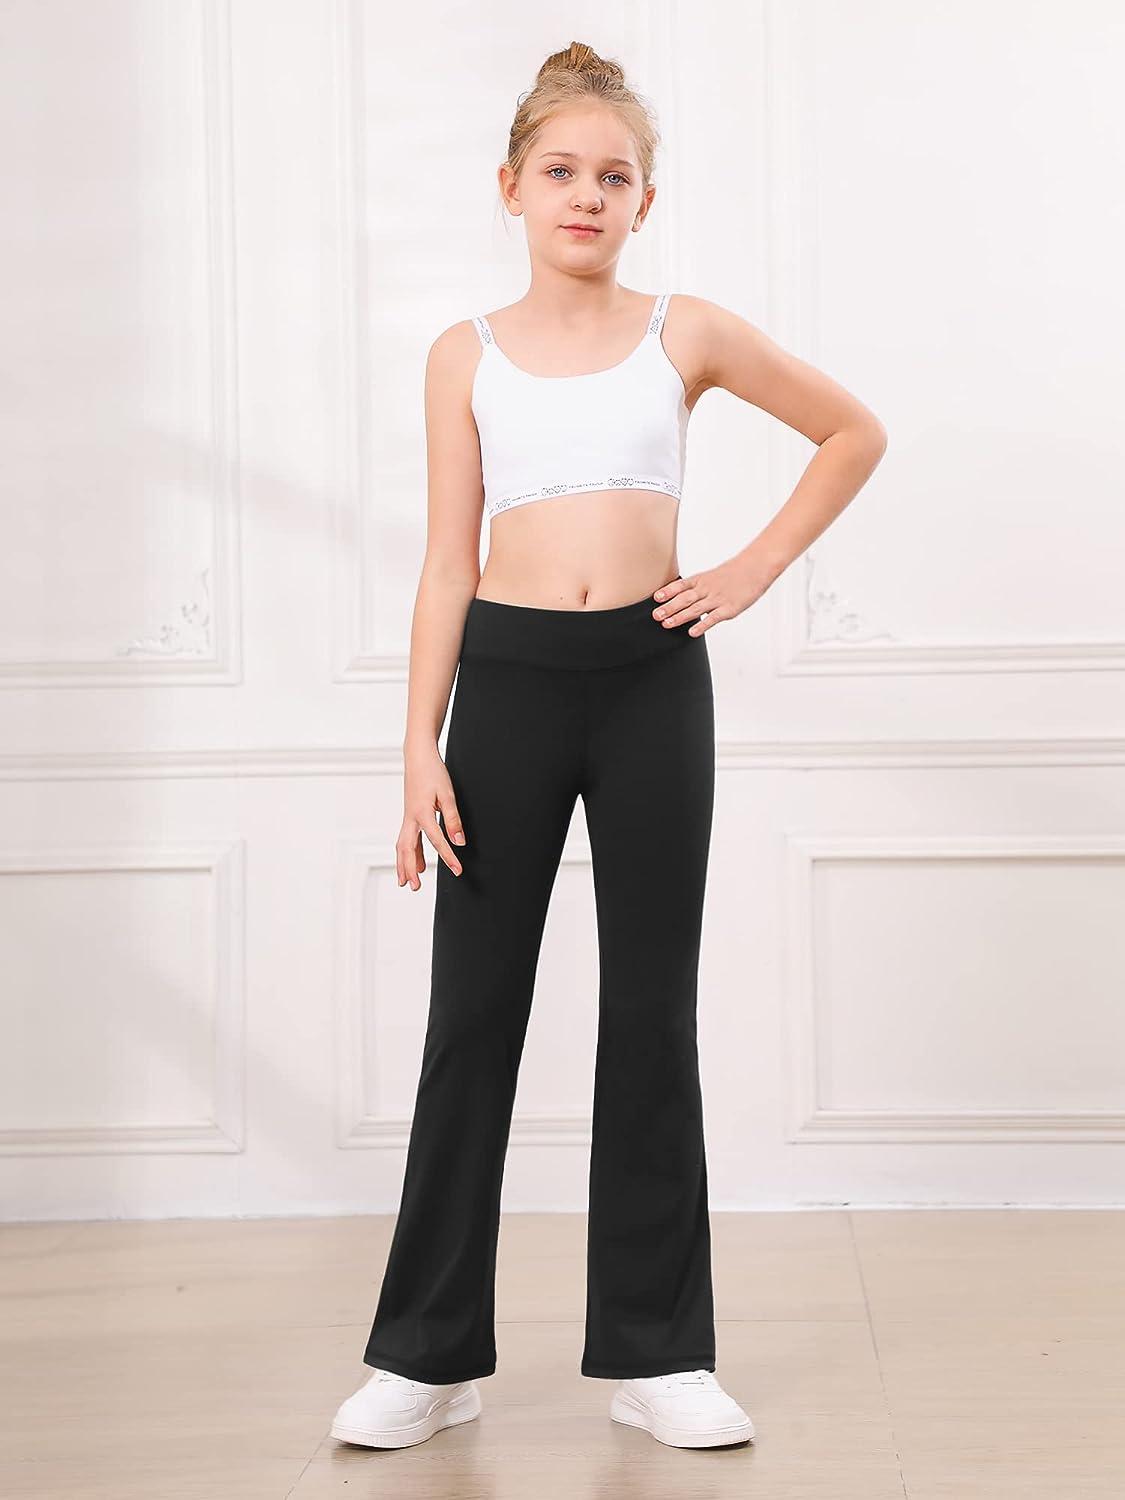 Ladies casual pants women's dance pants breathable yoga sport trousers